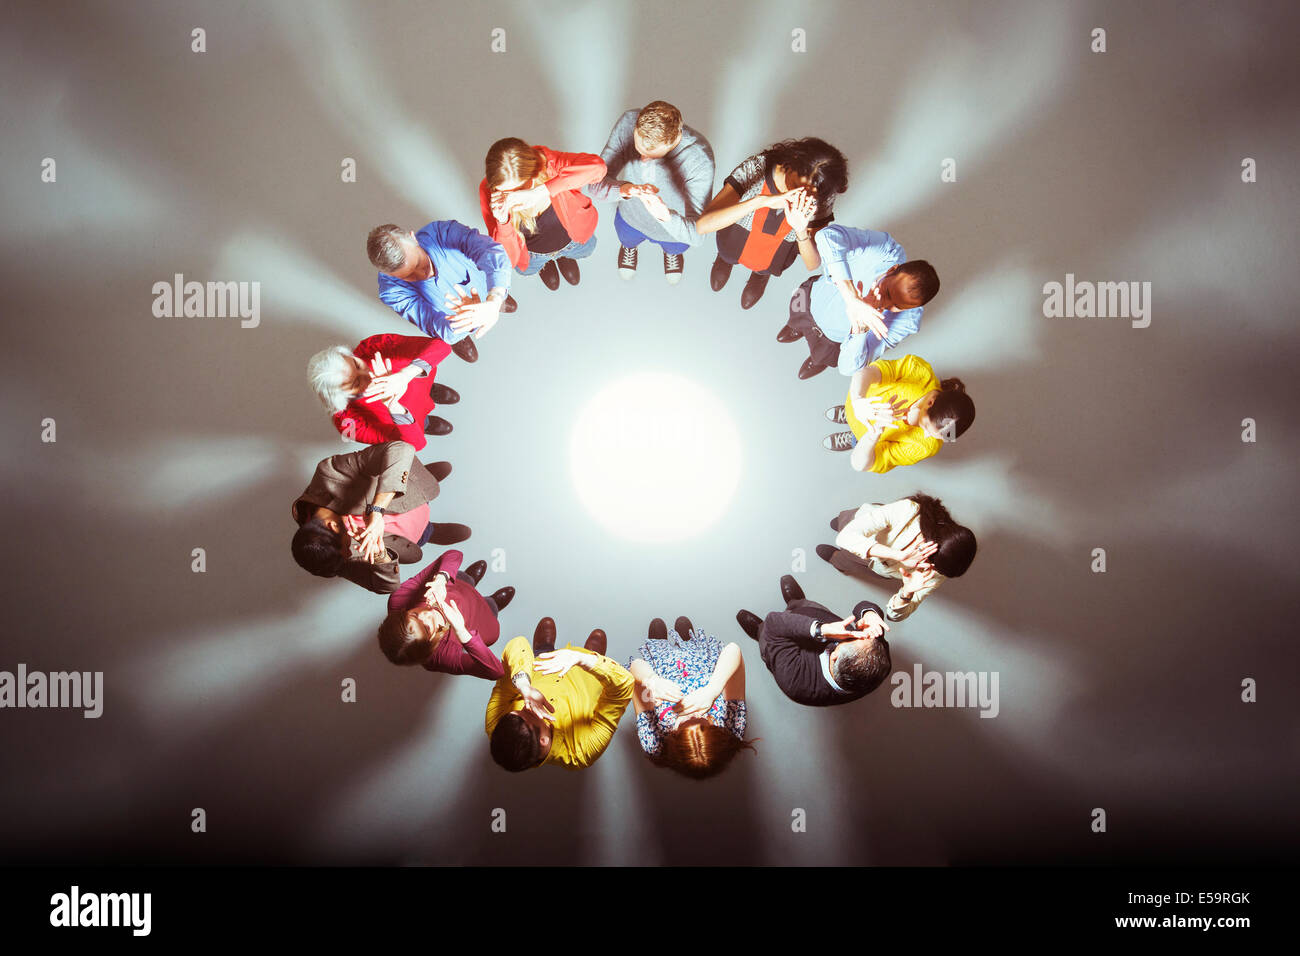 Crowd forming circle around bright light Stock Photo